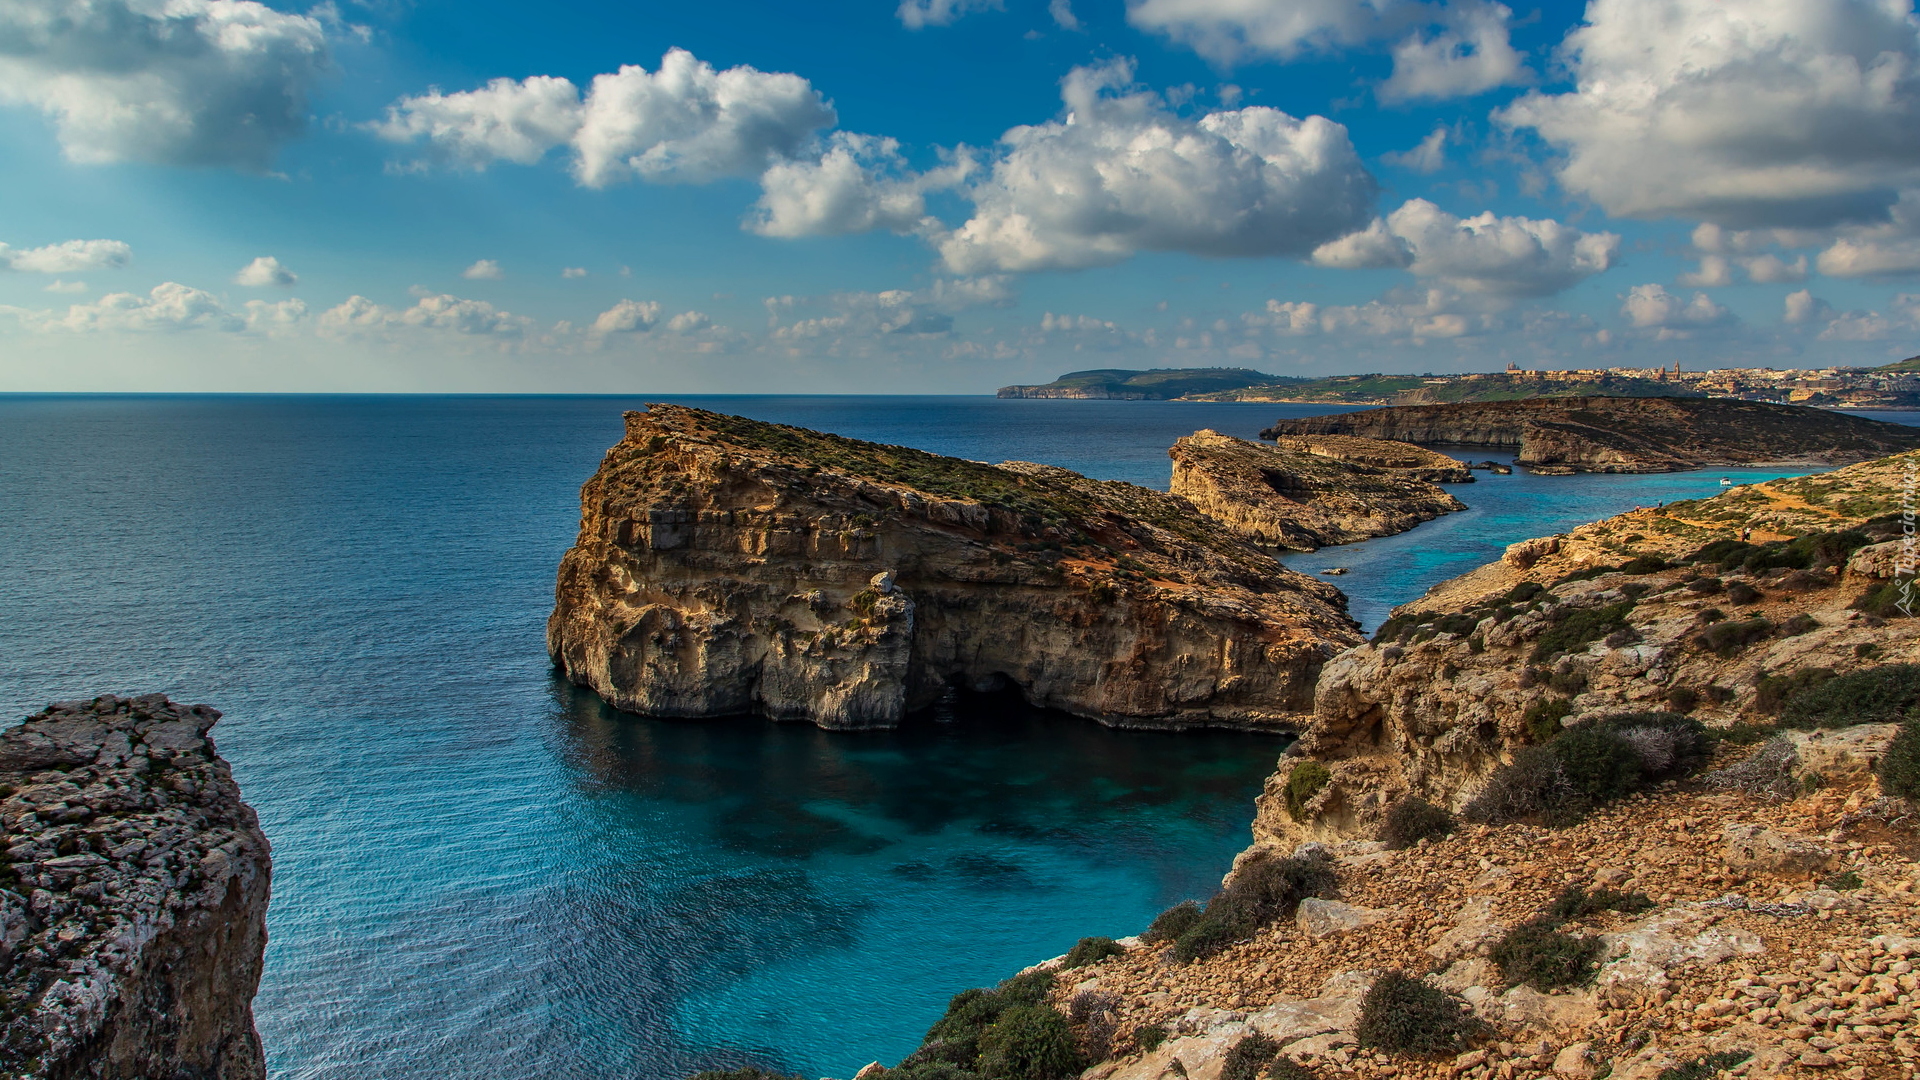 Skały, Morze, Chmury, Błękitna Laguna, Malta